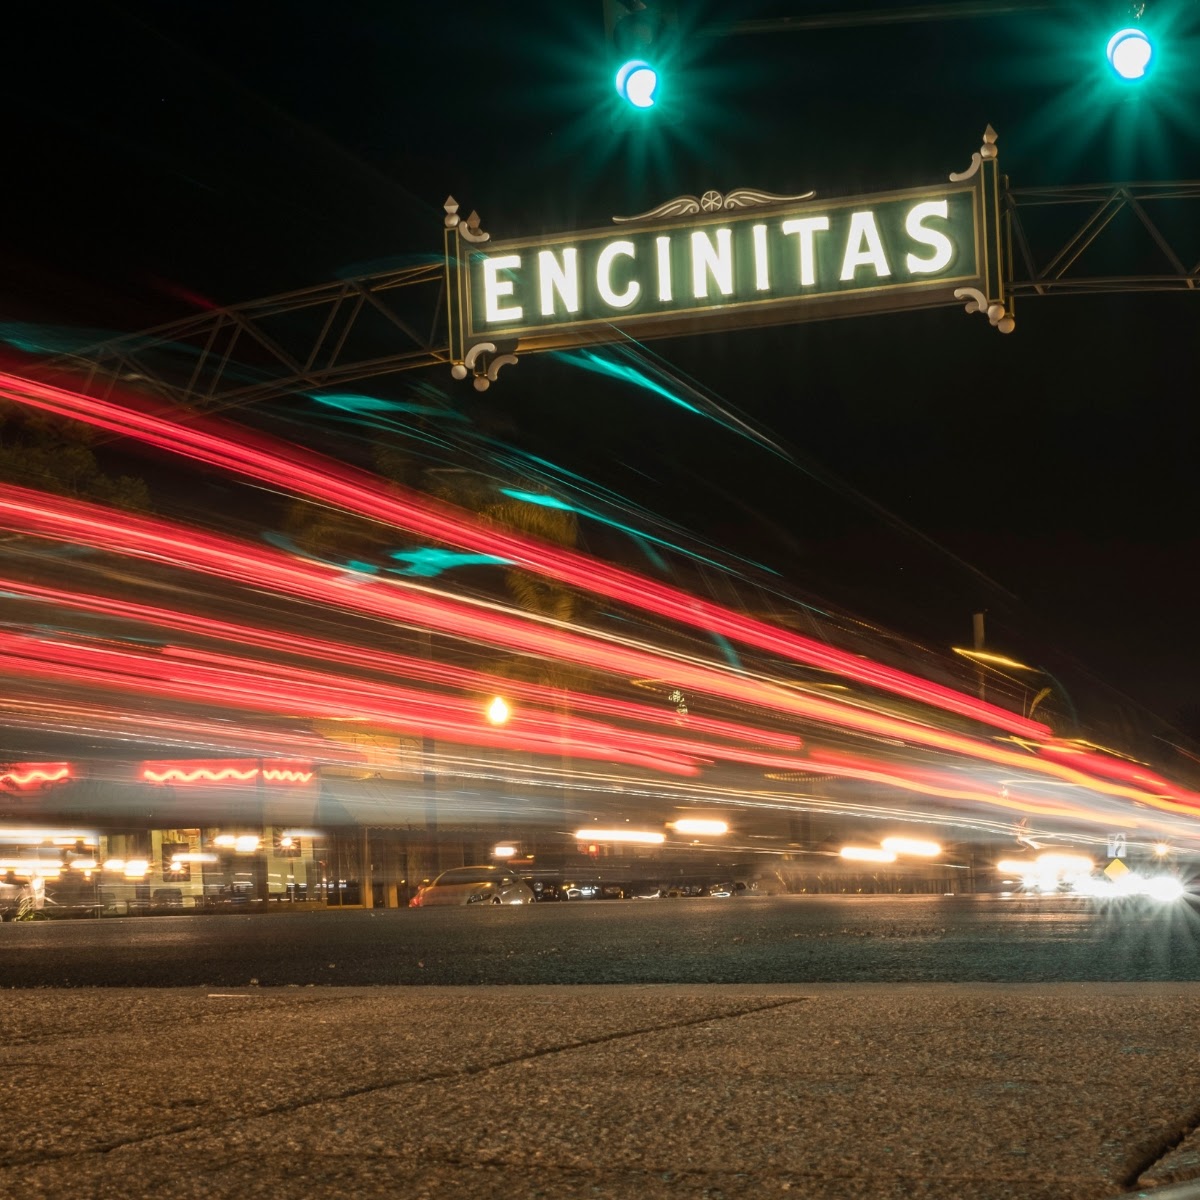 Welcome to Encinitas, CA